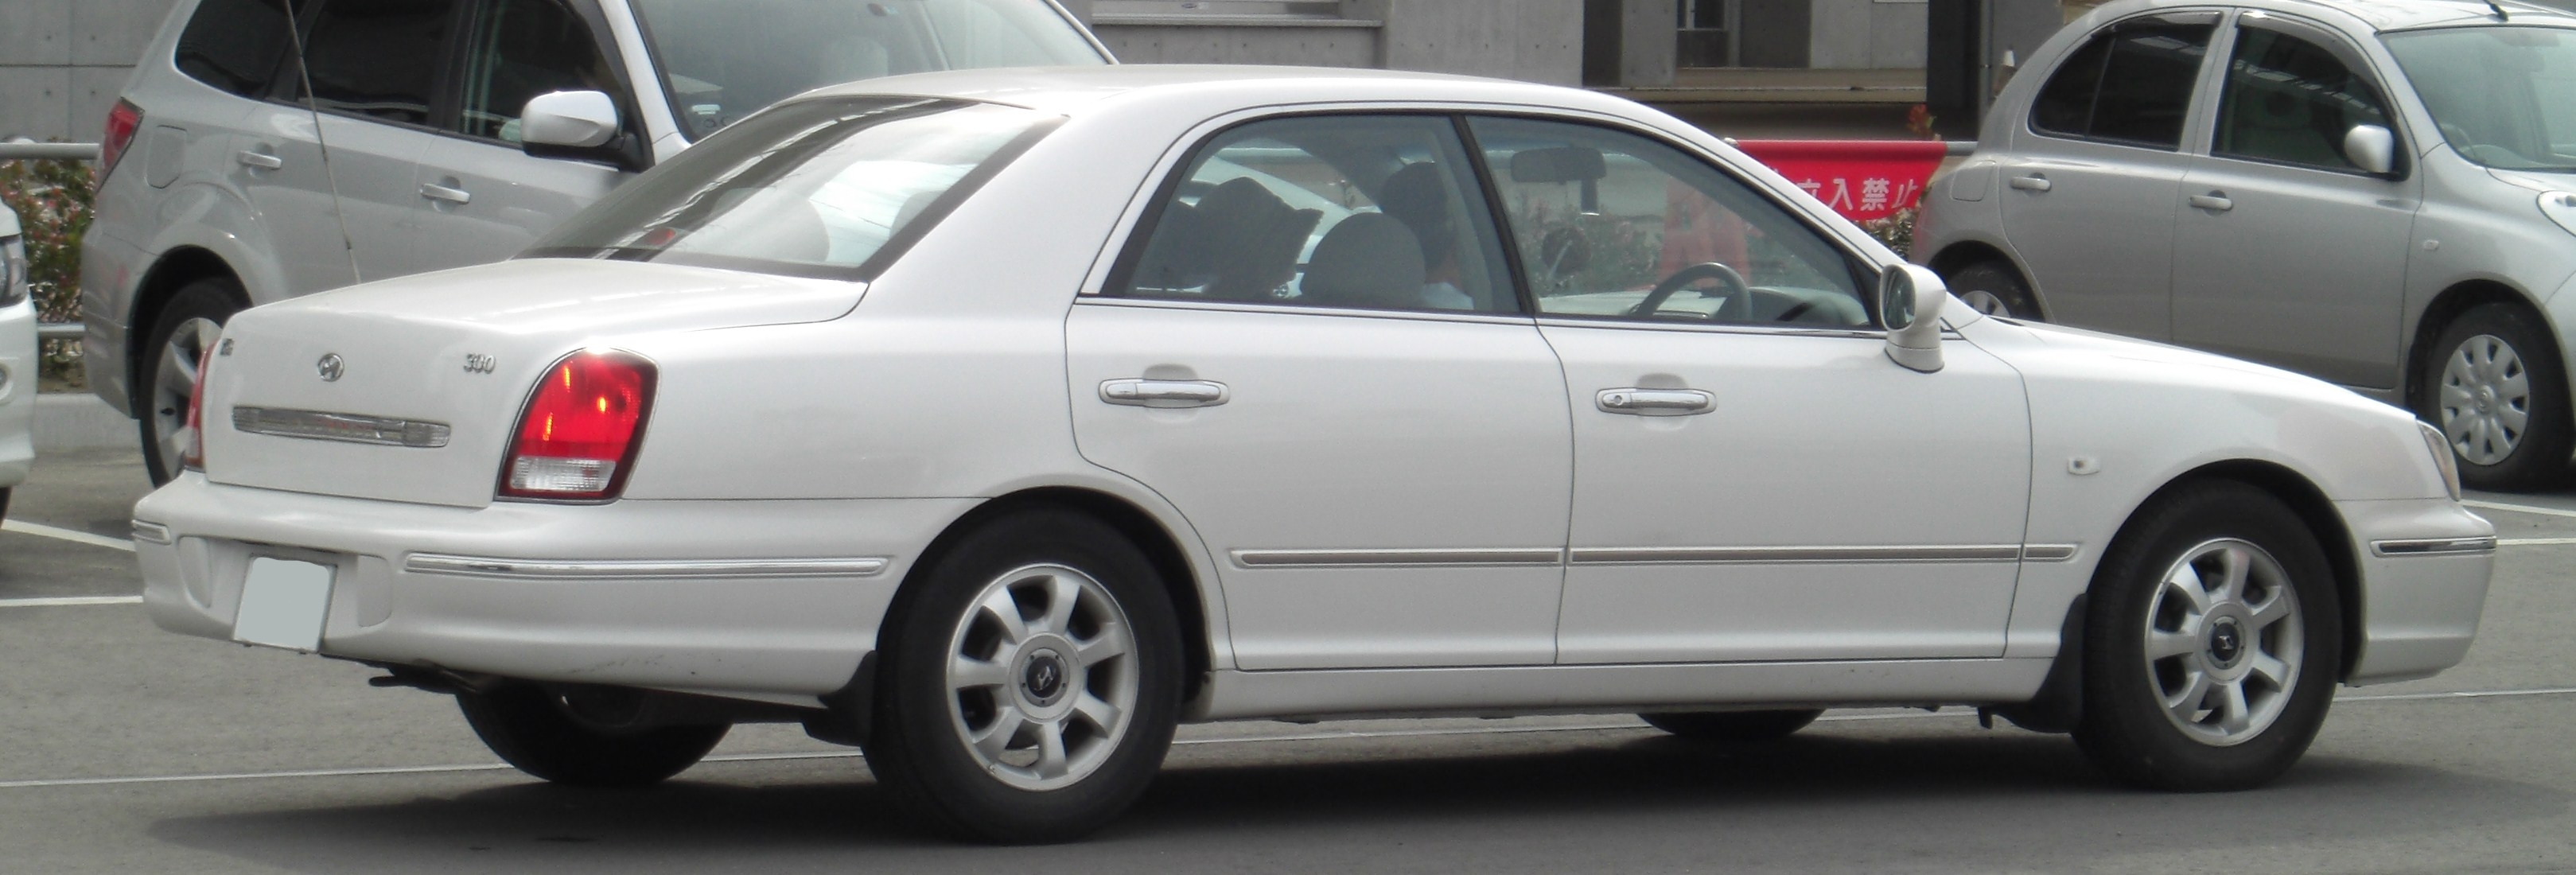 File:Hyundai XG300 rear.jpg - Wikimedia Commons